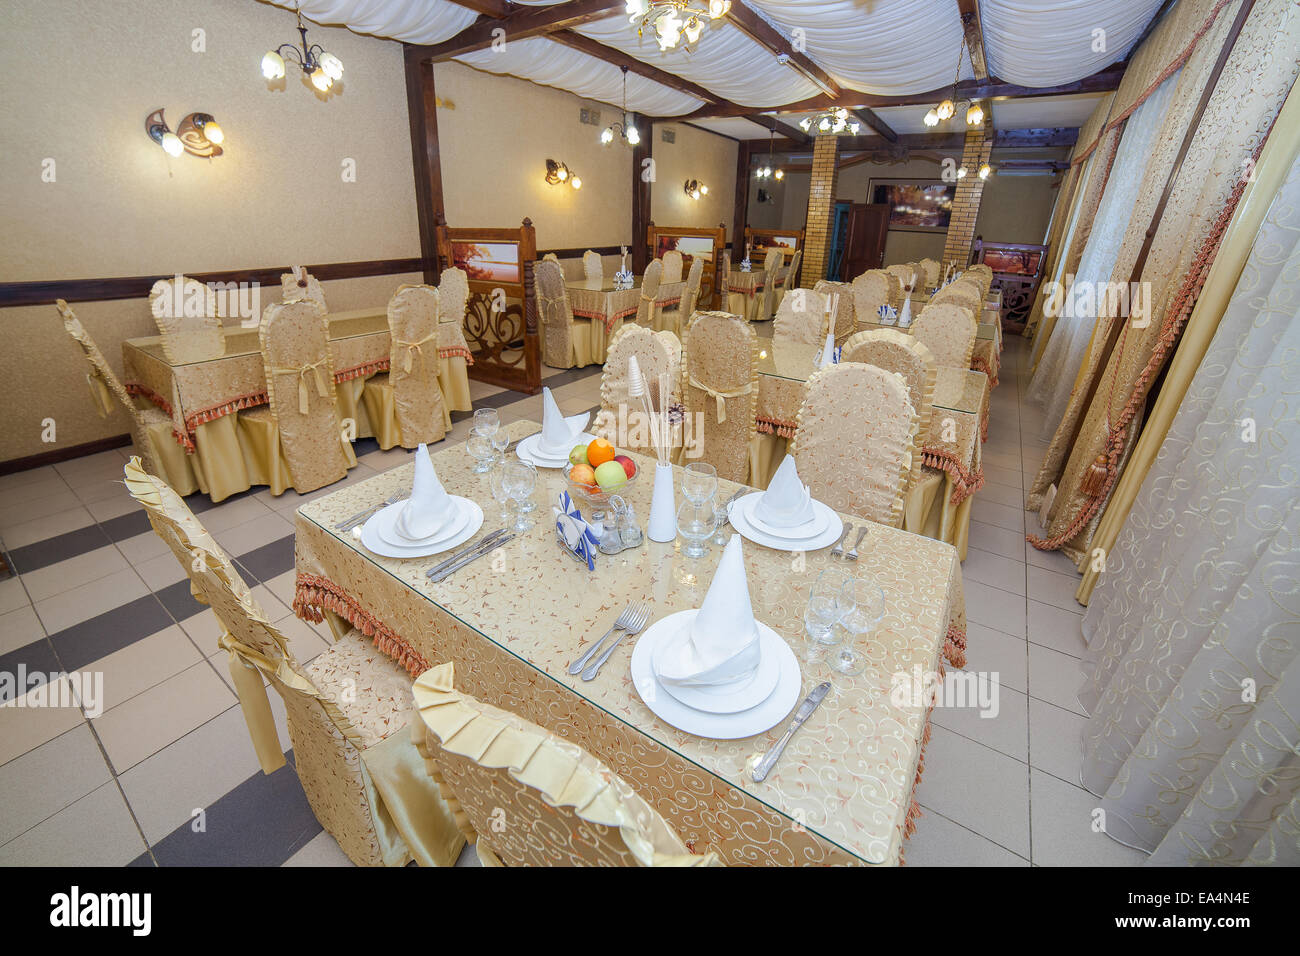 Interior design of modern restaurant Stock Photo